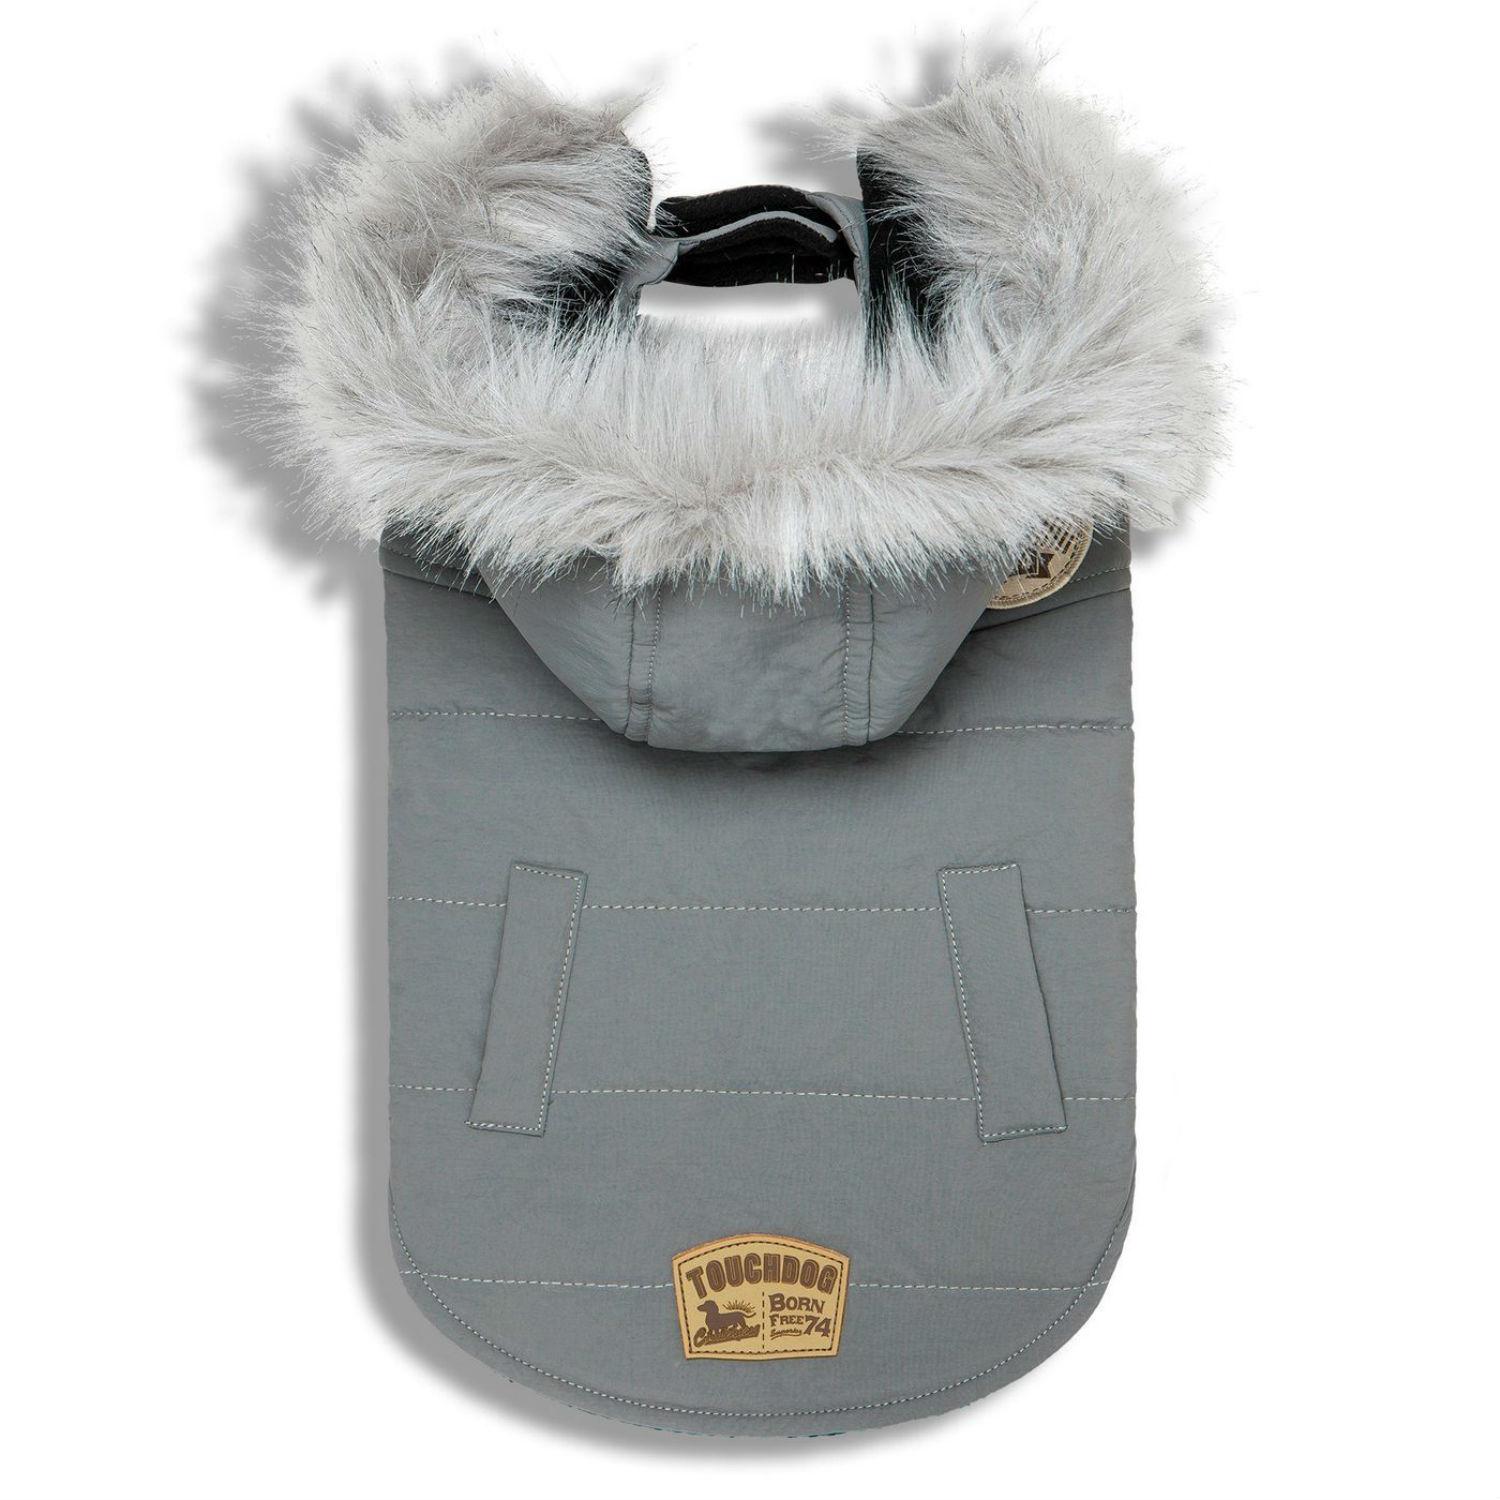 Pet Life Touchdog Eskimo-Swag Winter Dog Coat - Gray